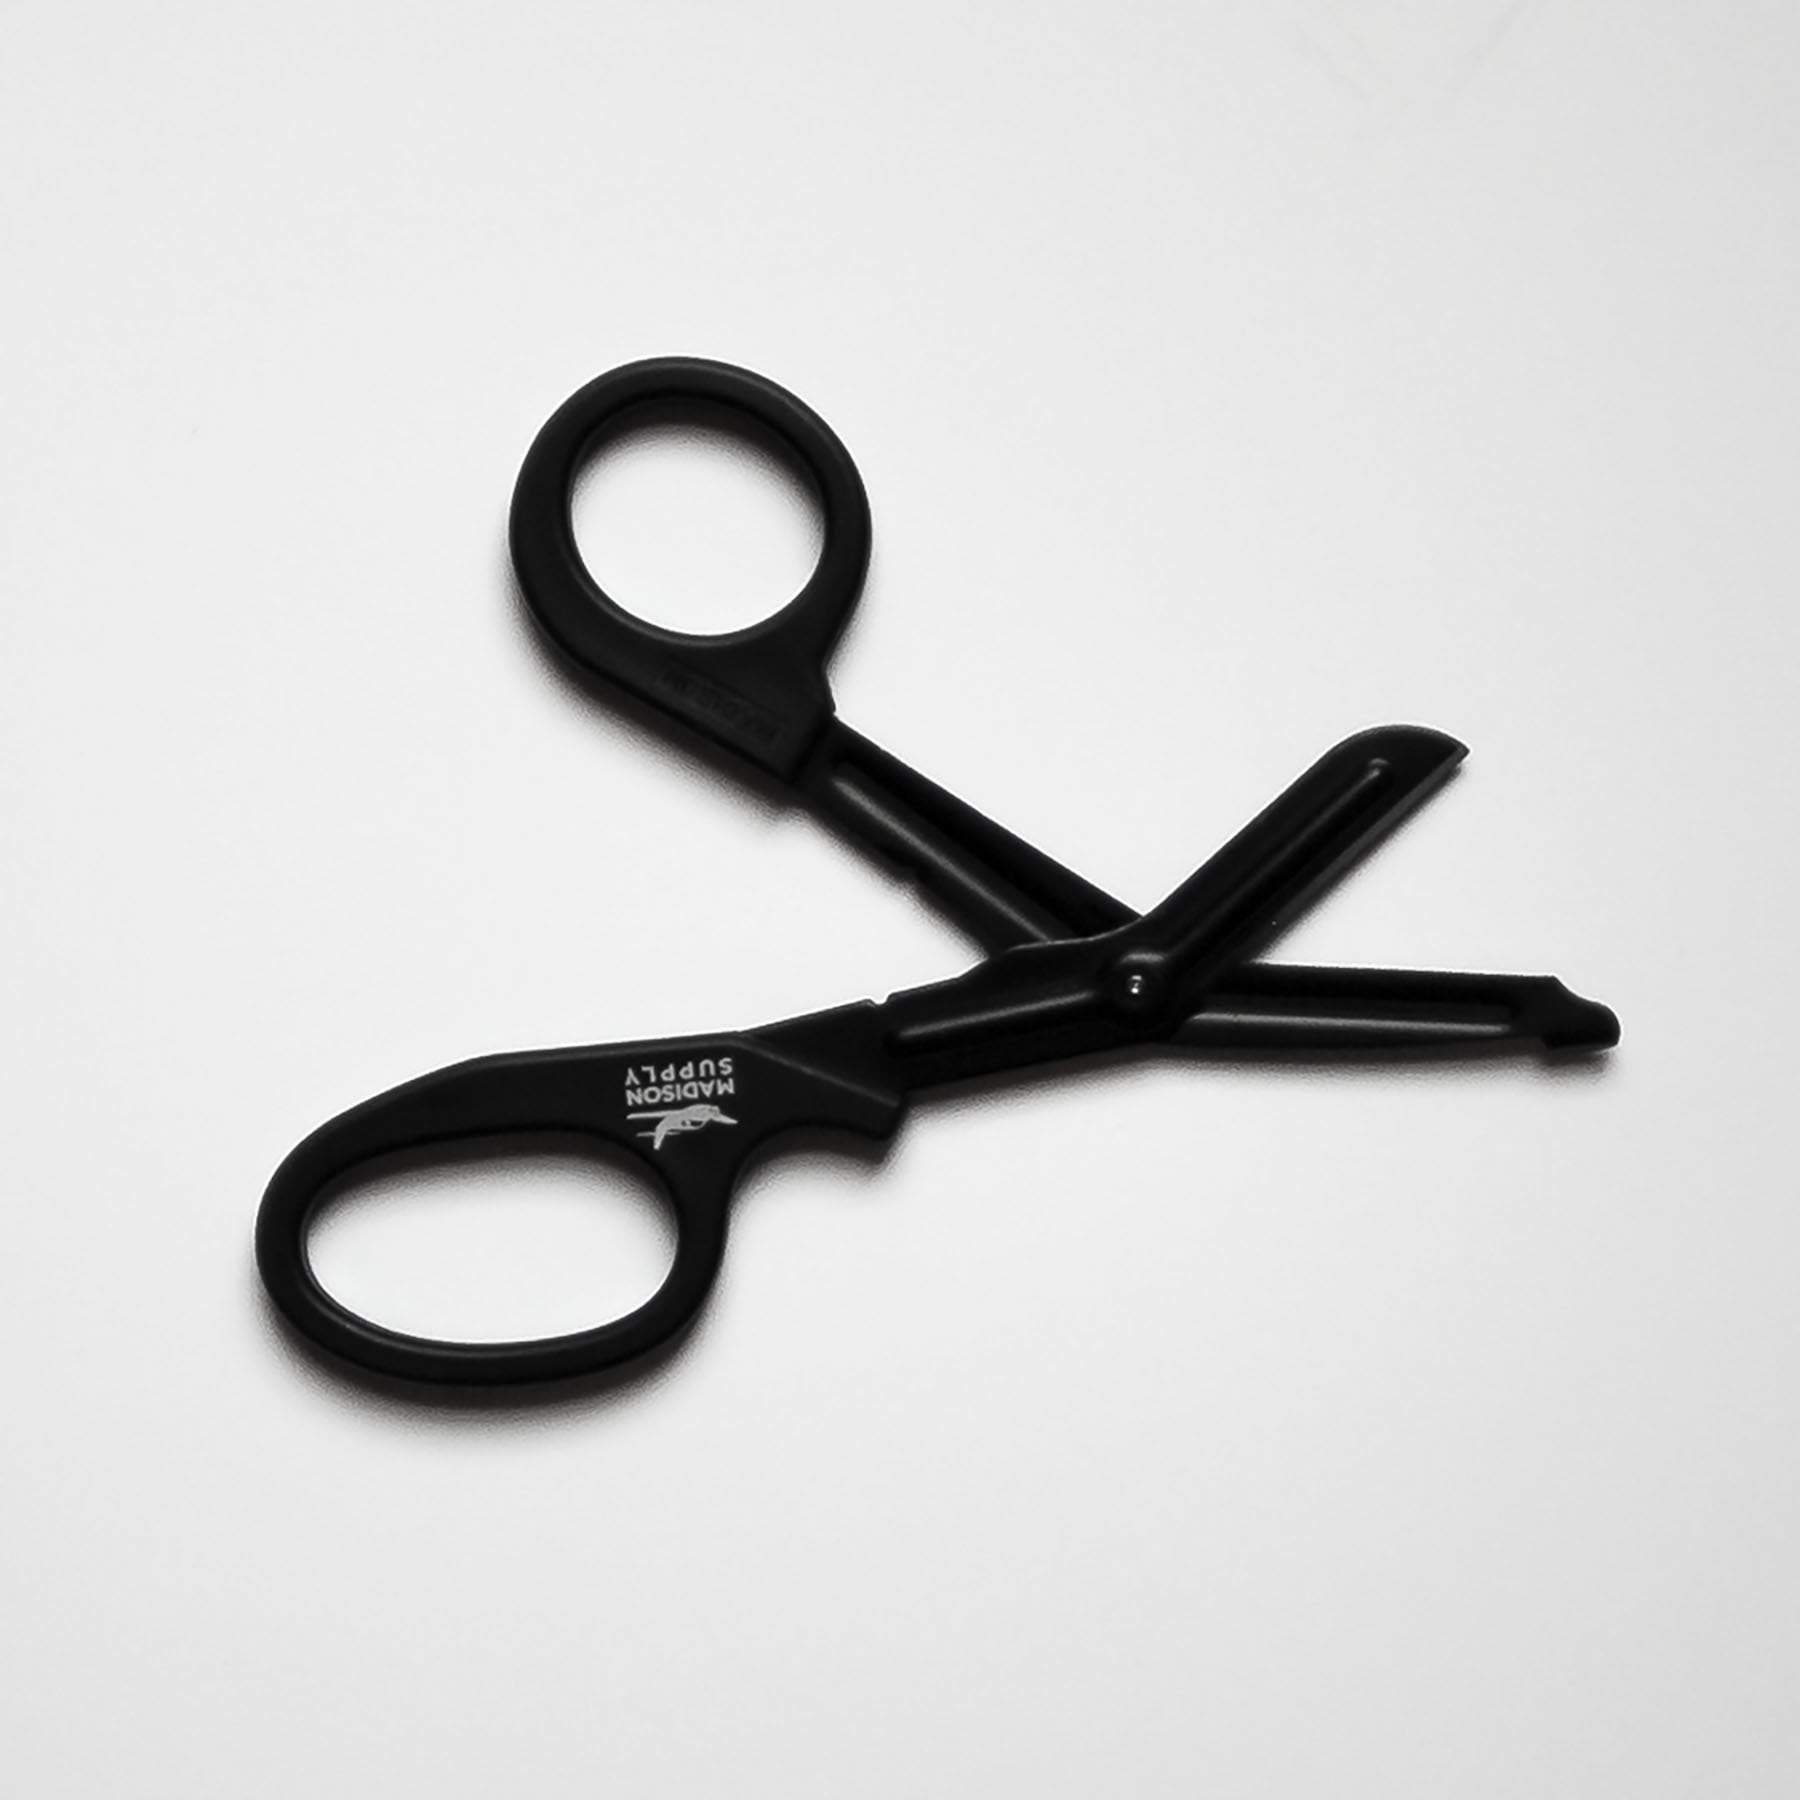 House Doctor Scissors black - 261420100